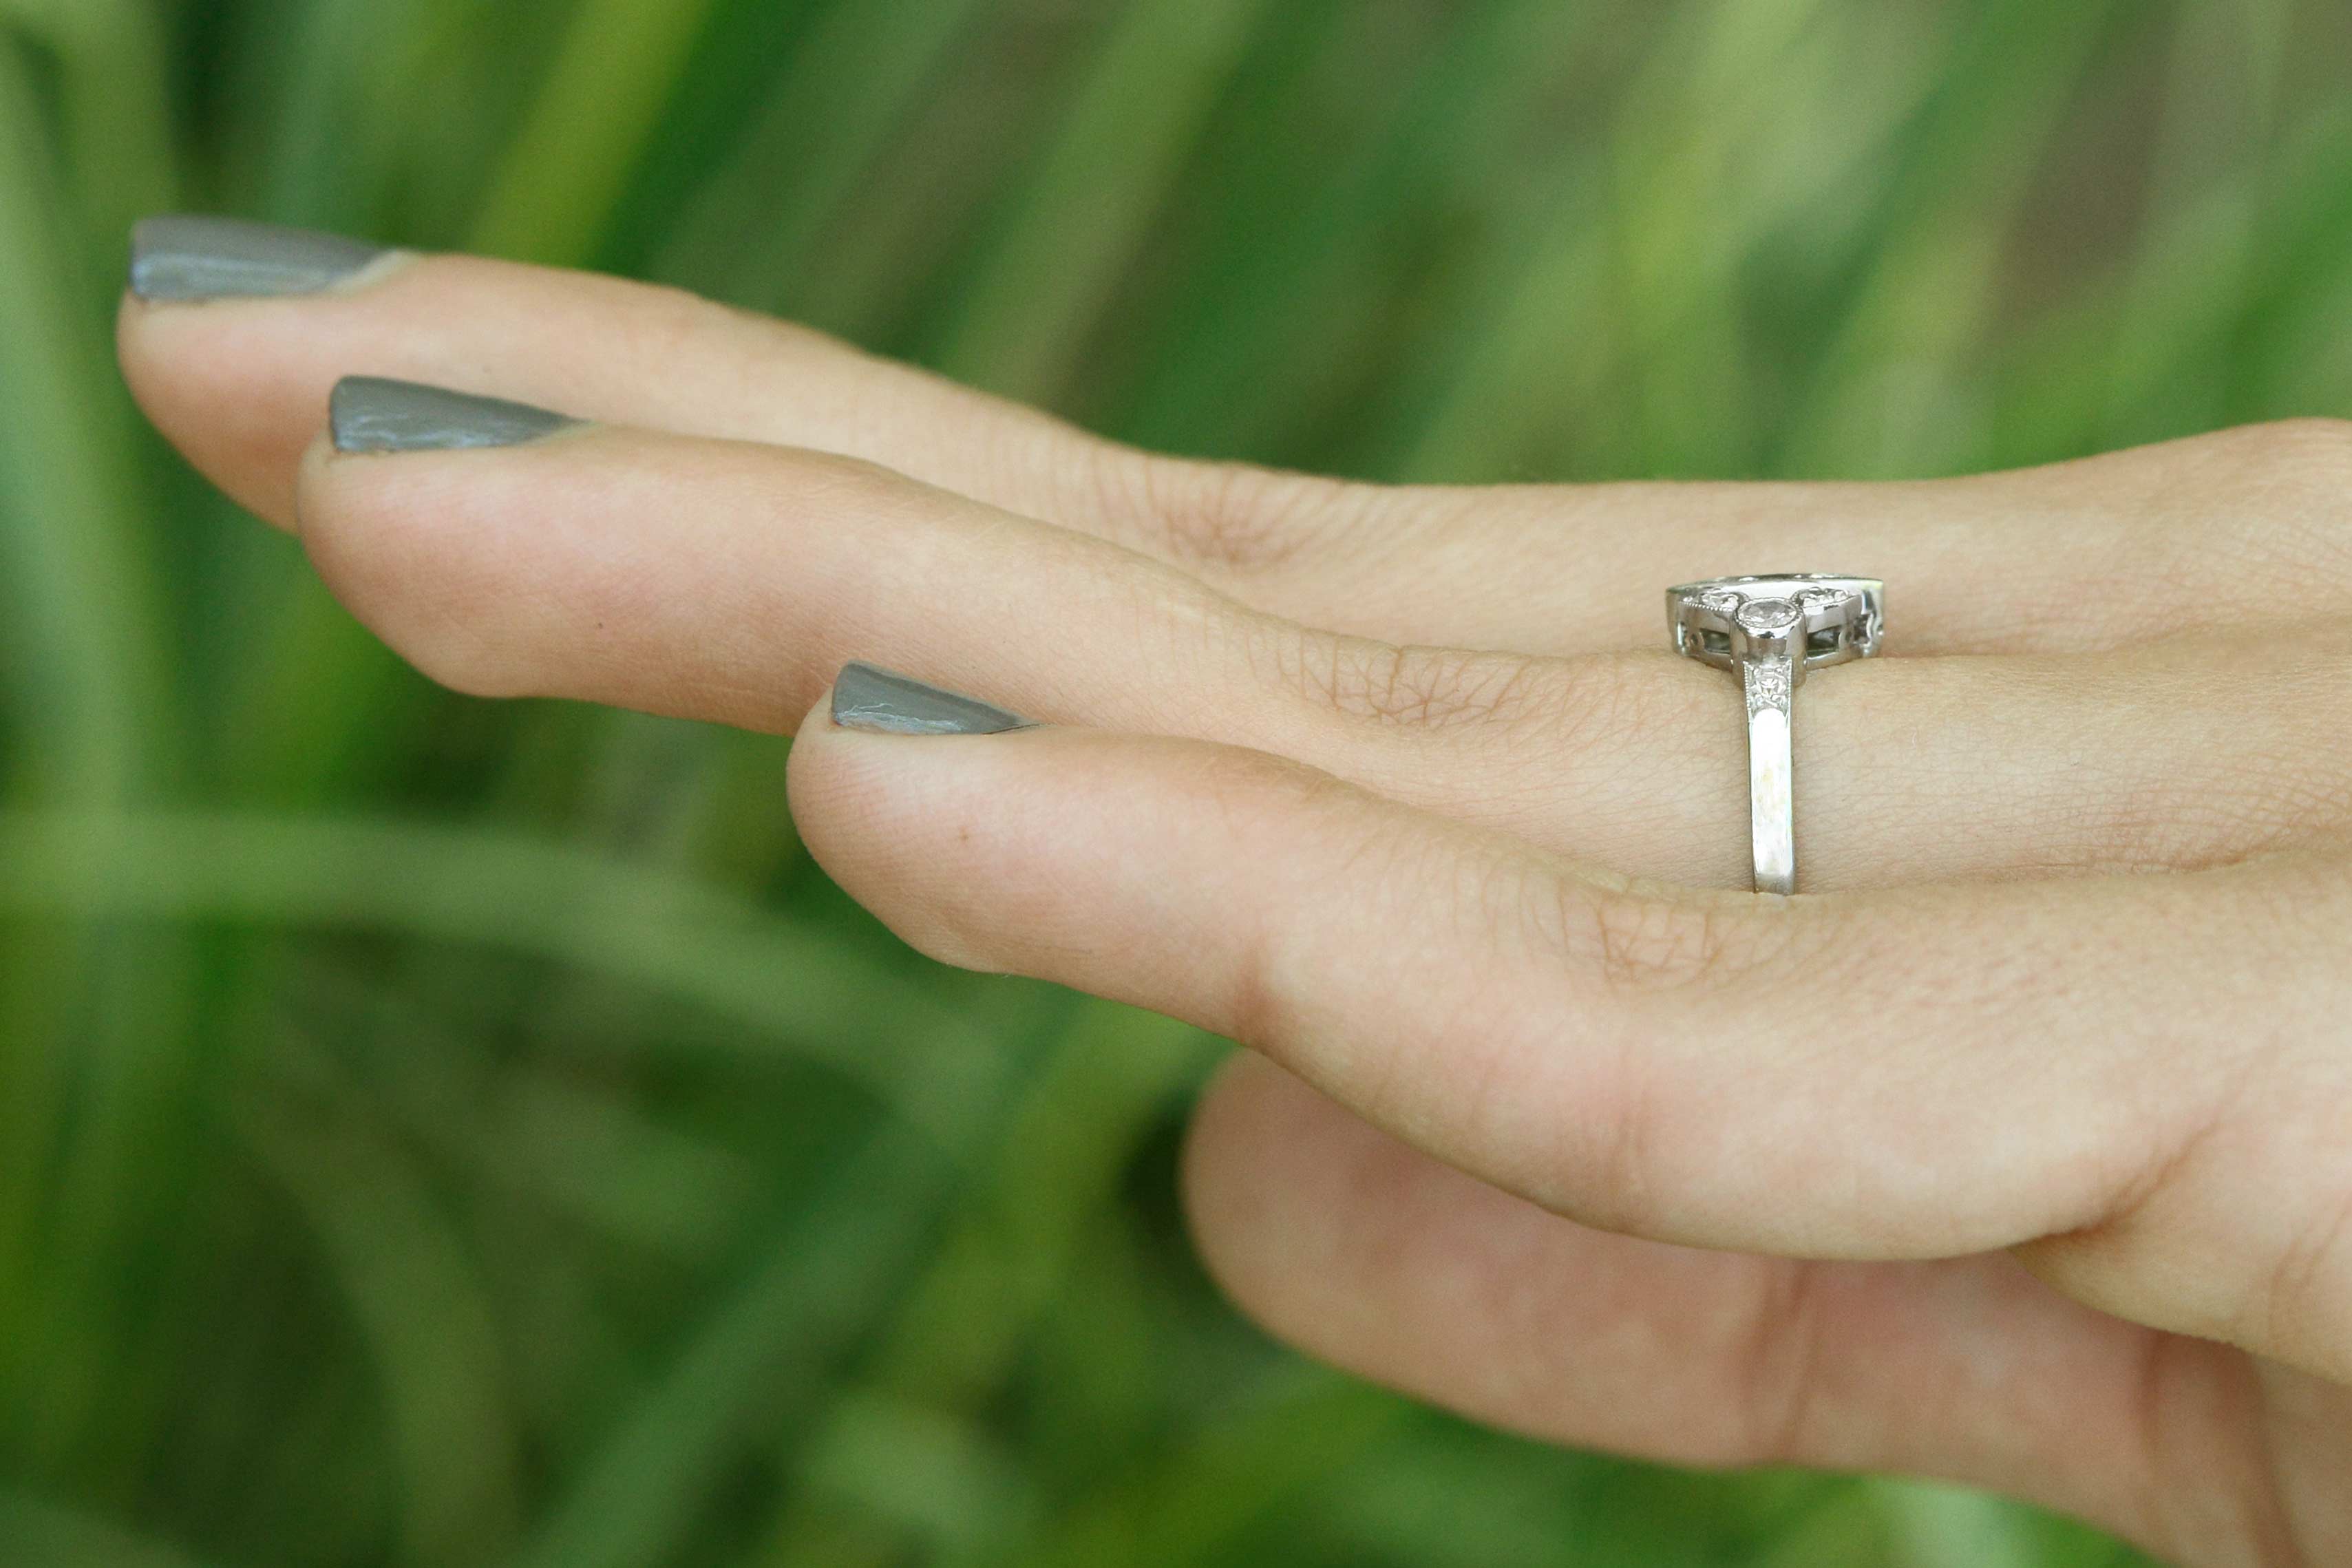 A low profile diamond wedding ring.